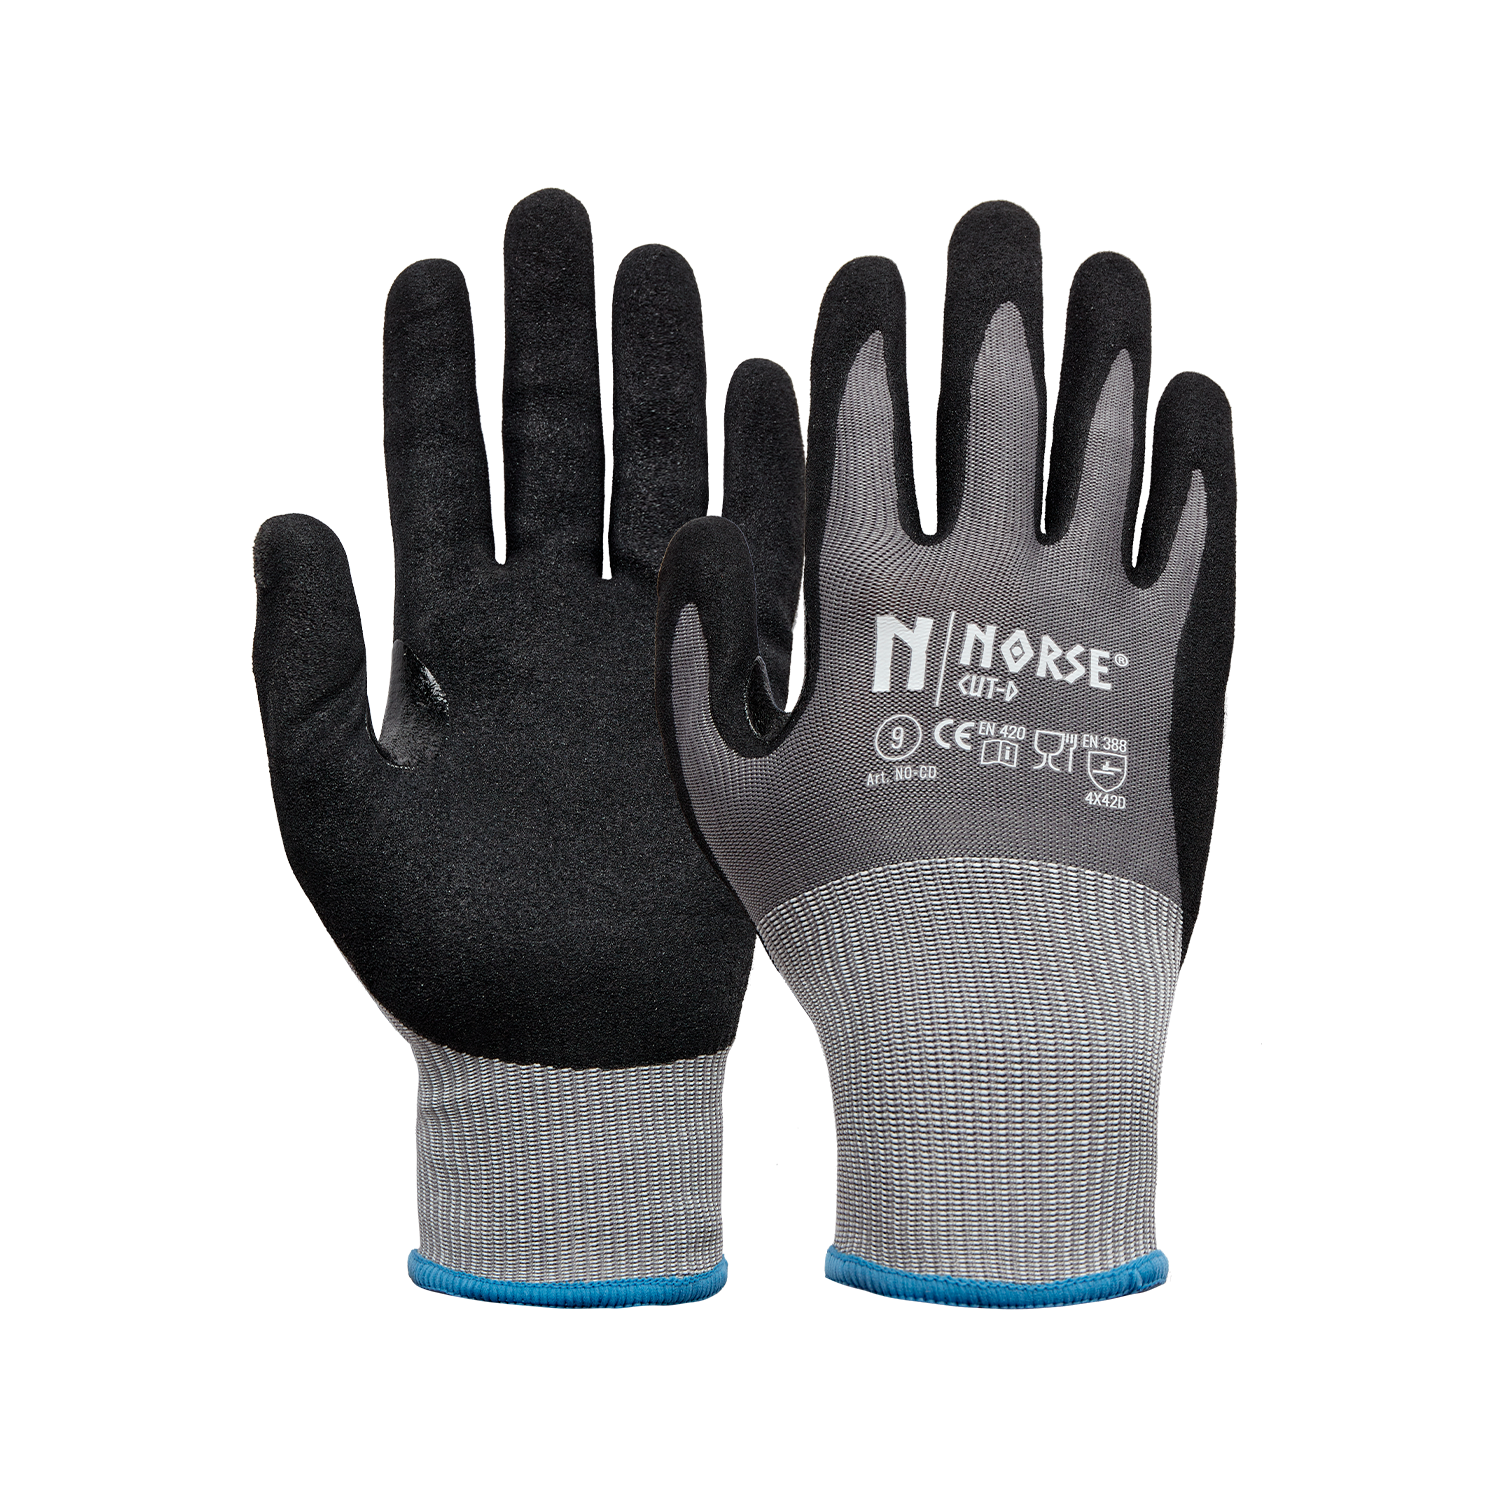 NORSE Cut-D cut-resistant assembly gloves size 7